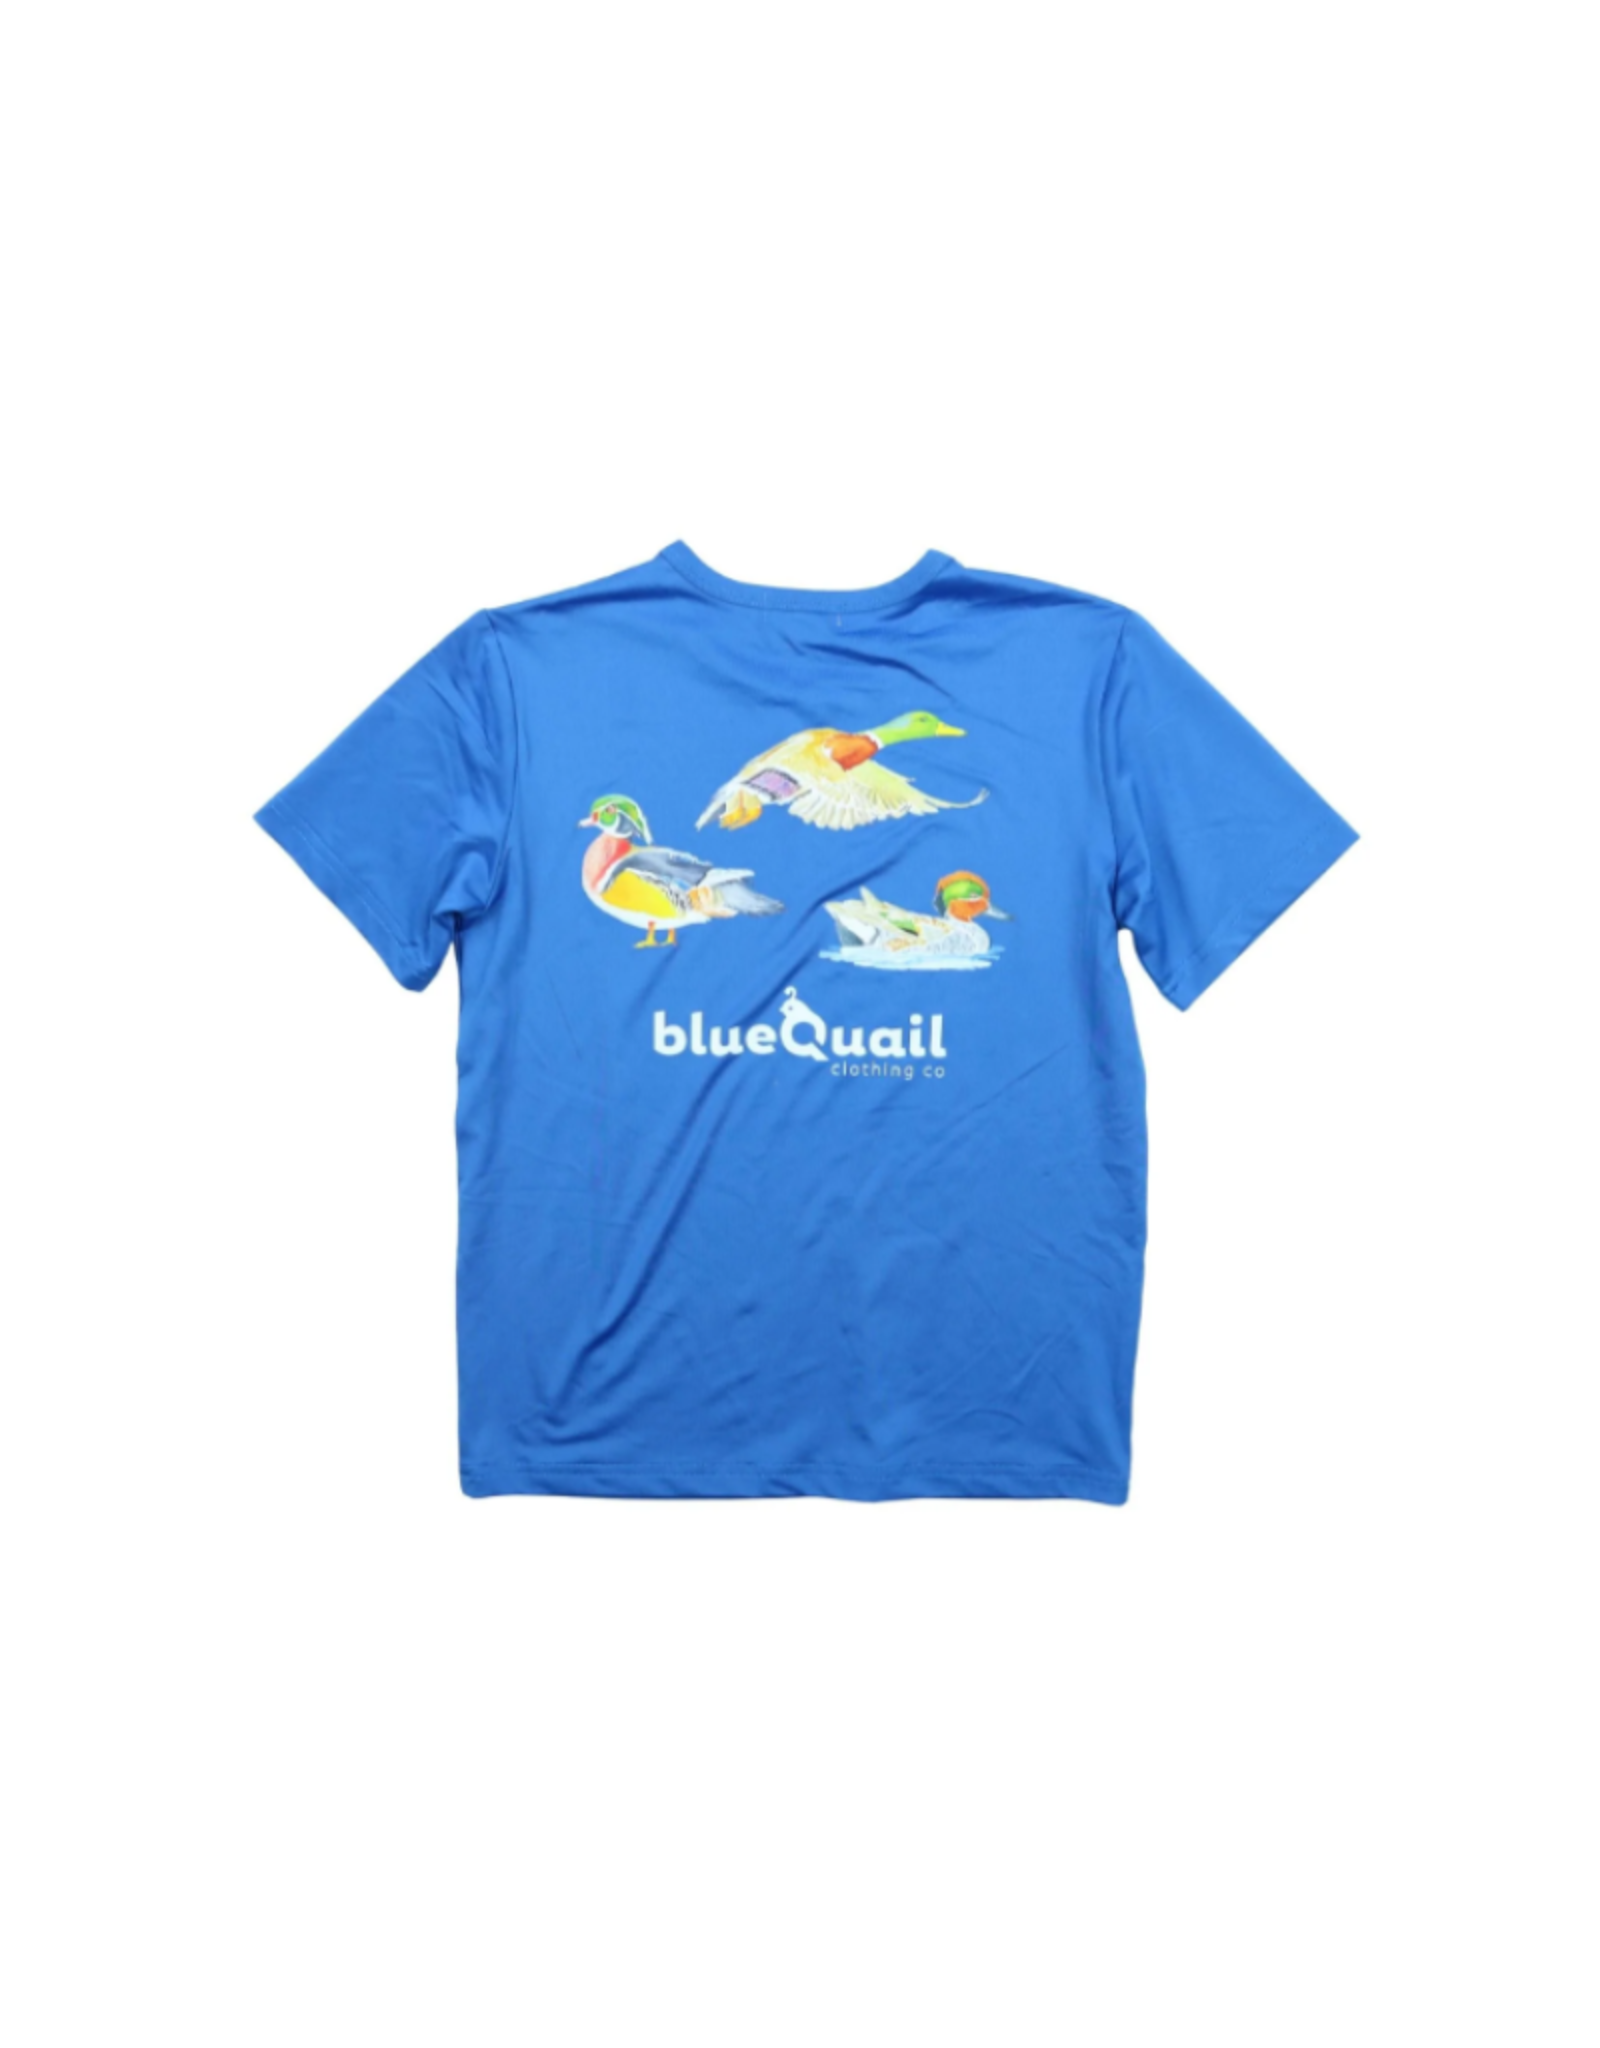 BlueQuail Clothing Co. Ducks Short Sleeve Performance Tee